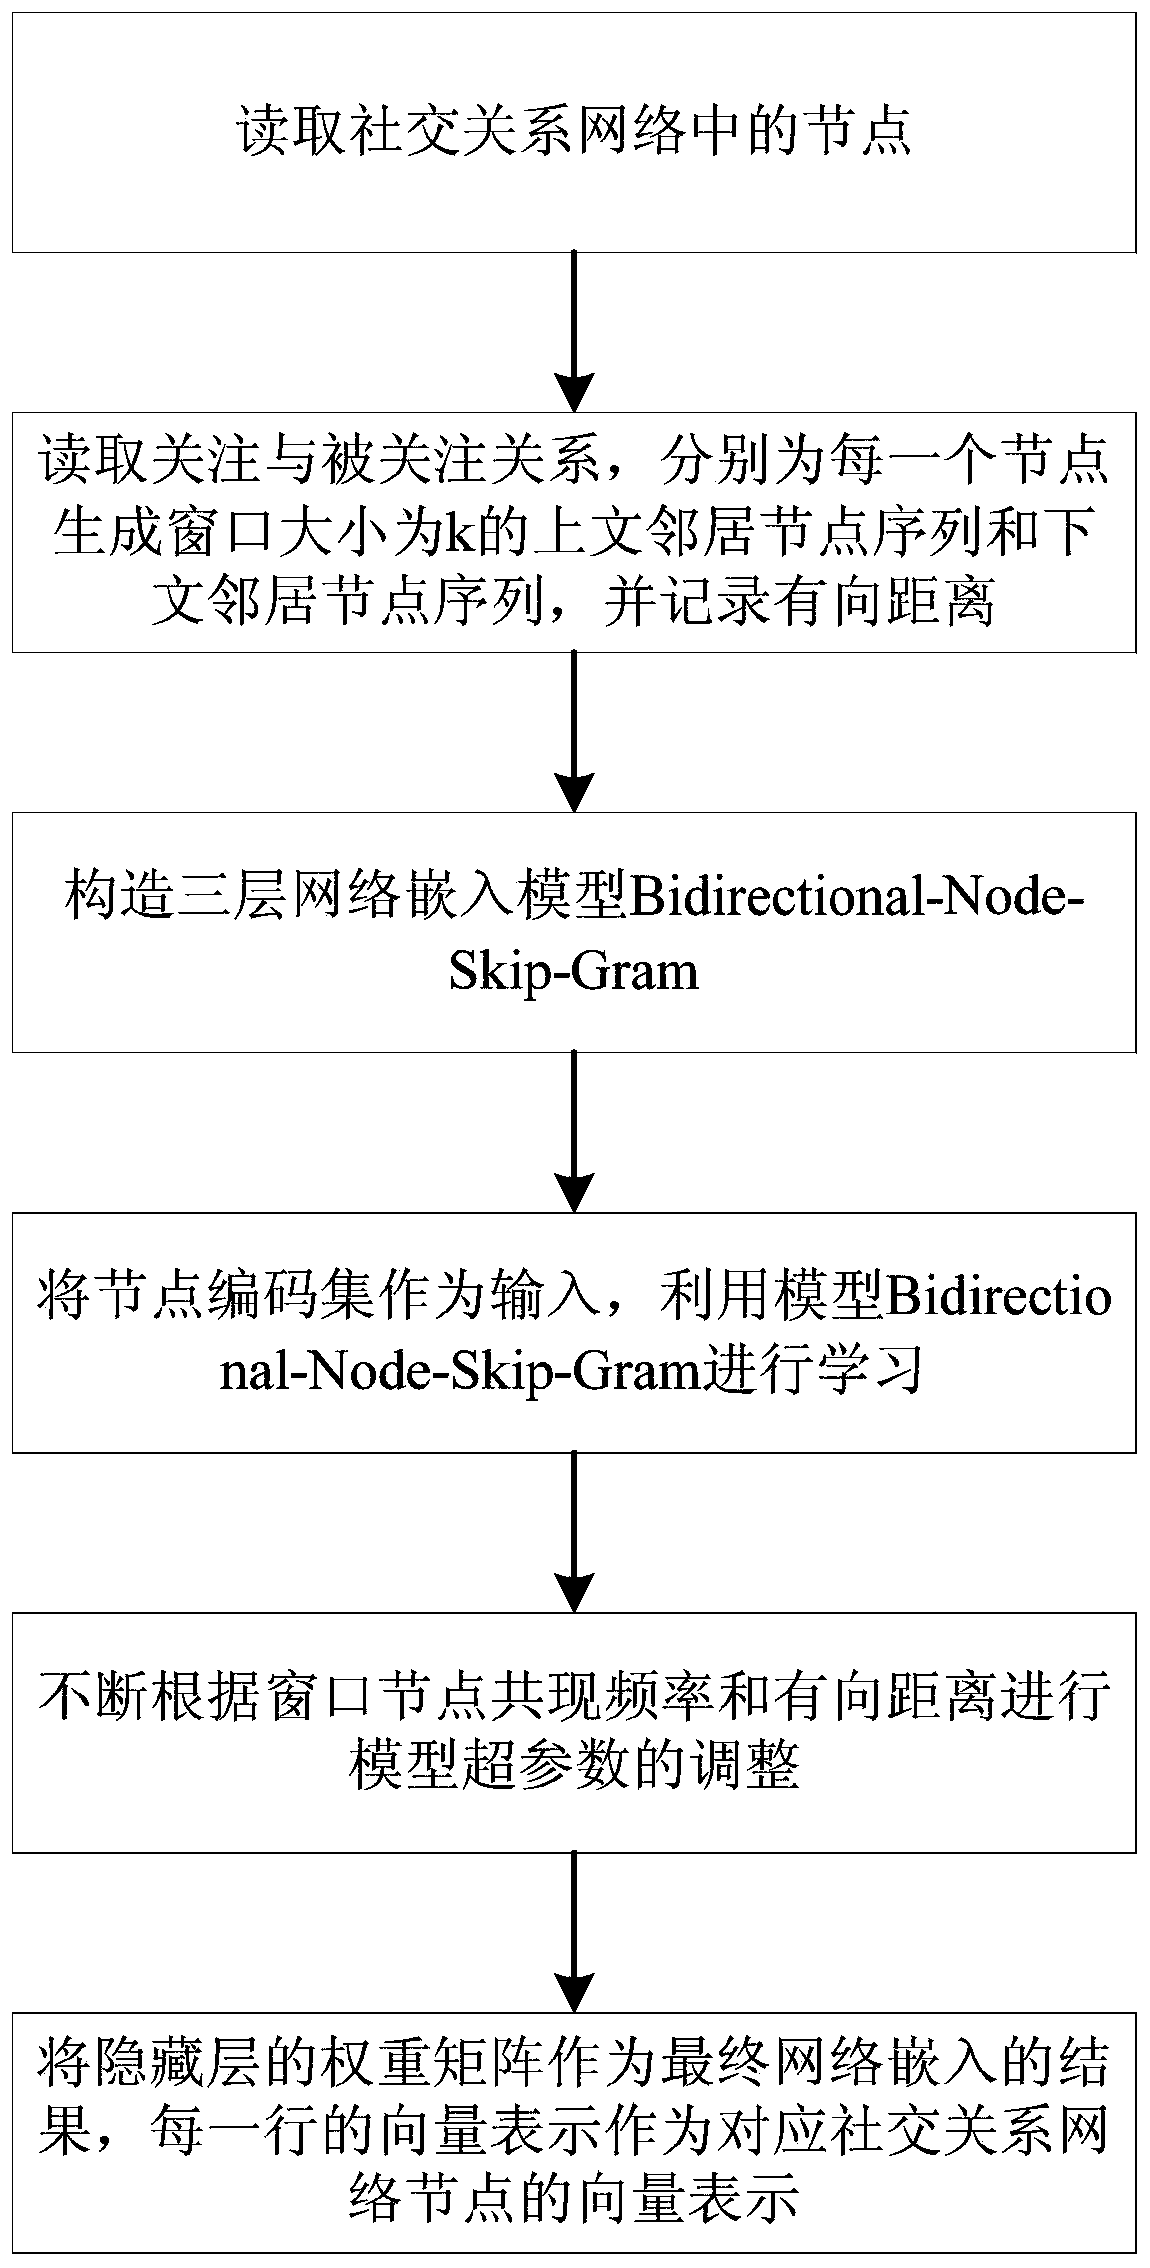 Social network representation method based on bidirectional distance network embedding